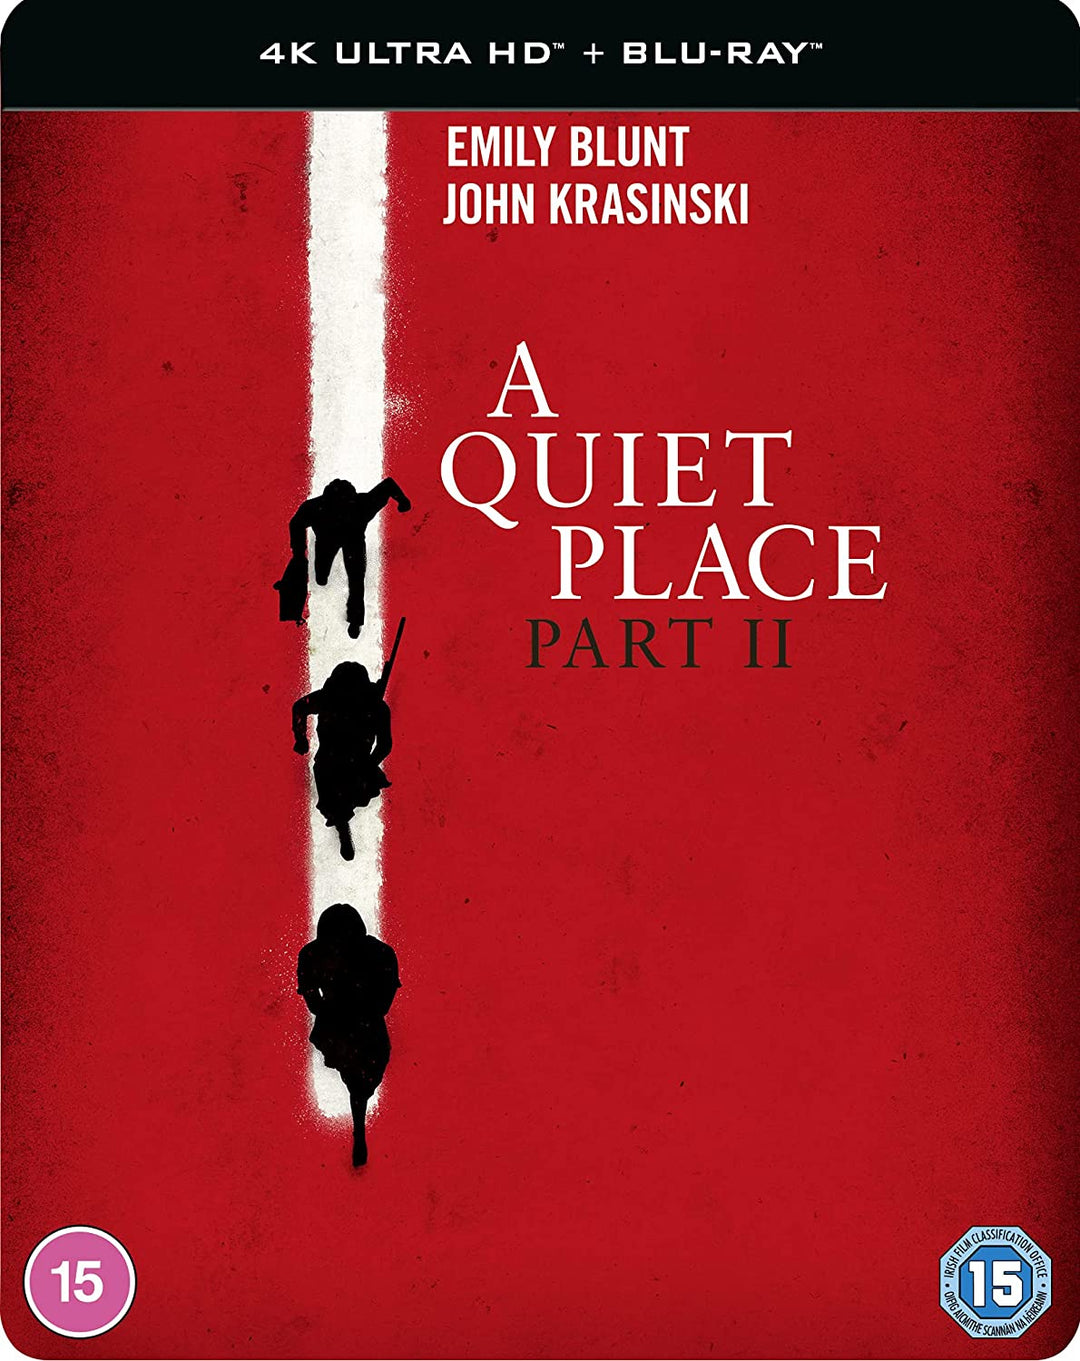 A Quiet Place Part II 4K UHD Steelbook - Horror/Sci-fi [Blu-ray]